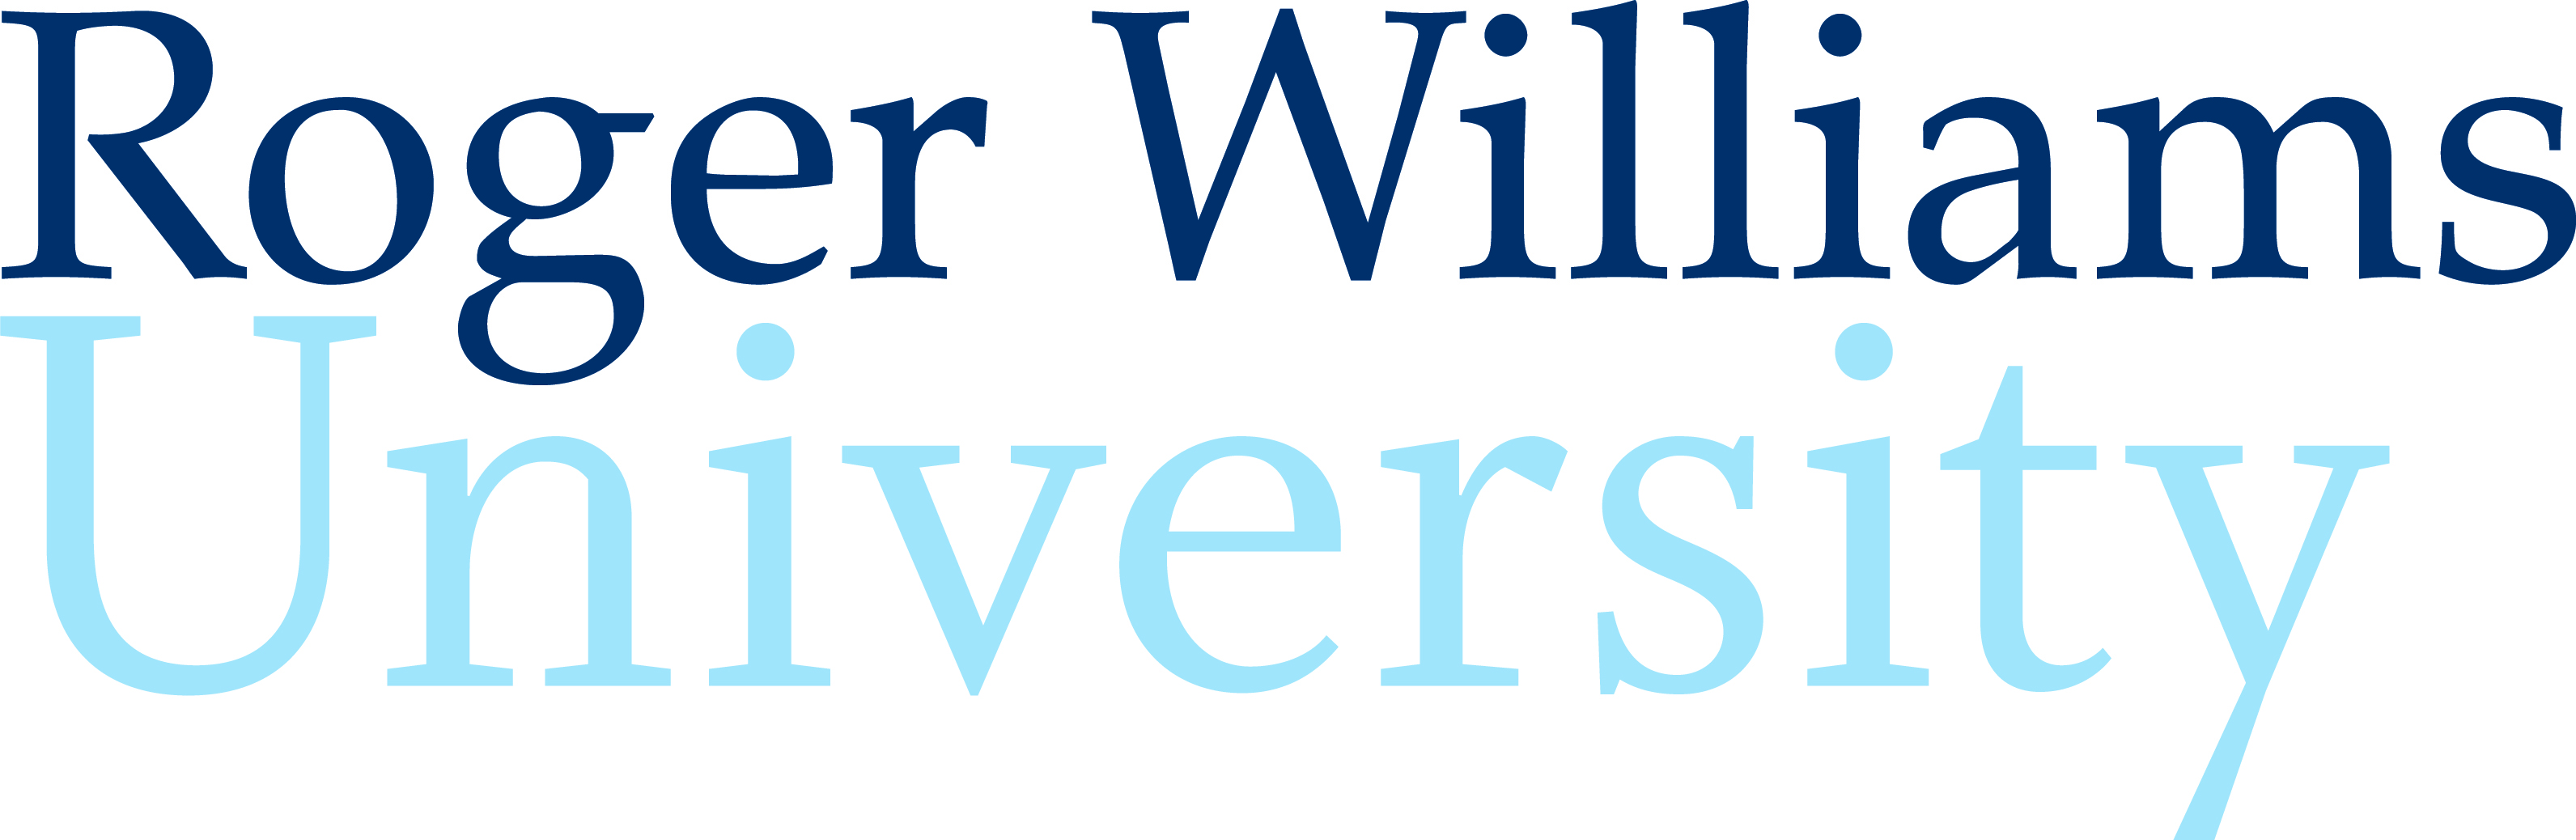 Thanks, Roger Williams University, for sponsoring our 50th anniversary celebration!